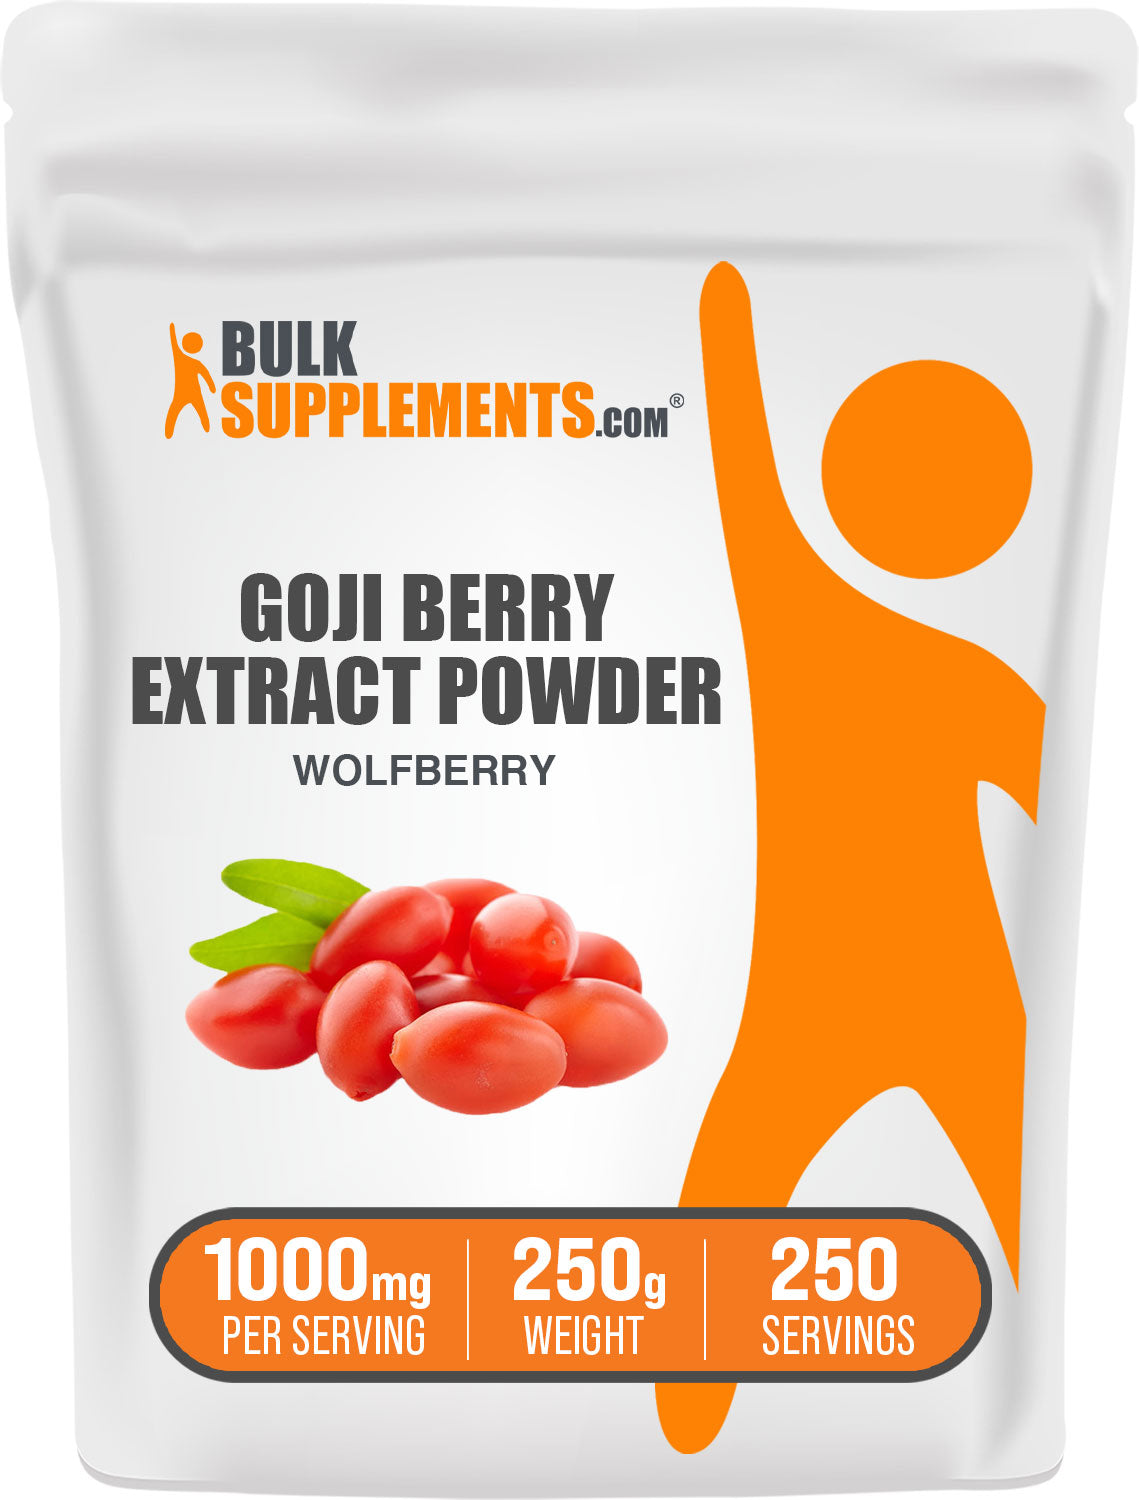 BulkSupplements Goji Berry Extract Powder Wolfberry 250g bag